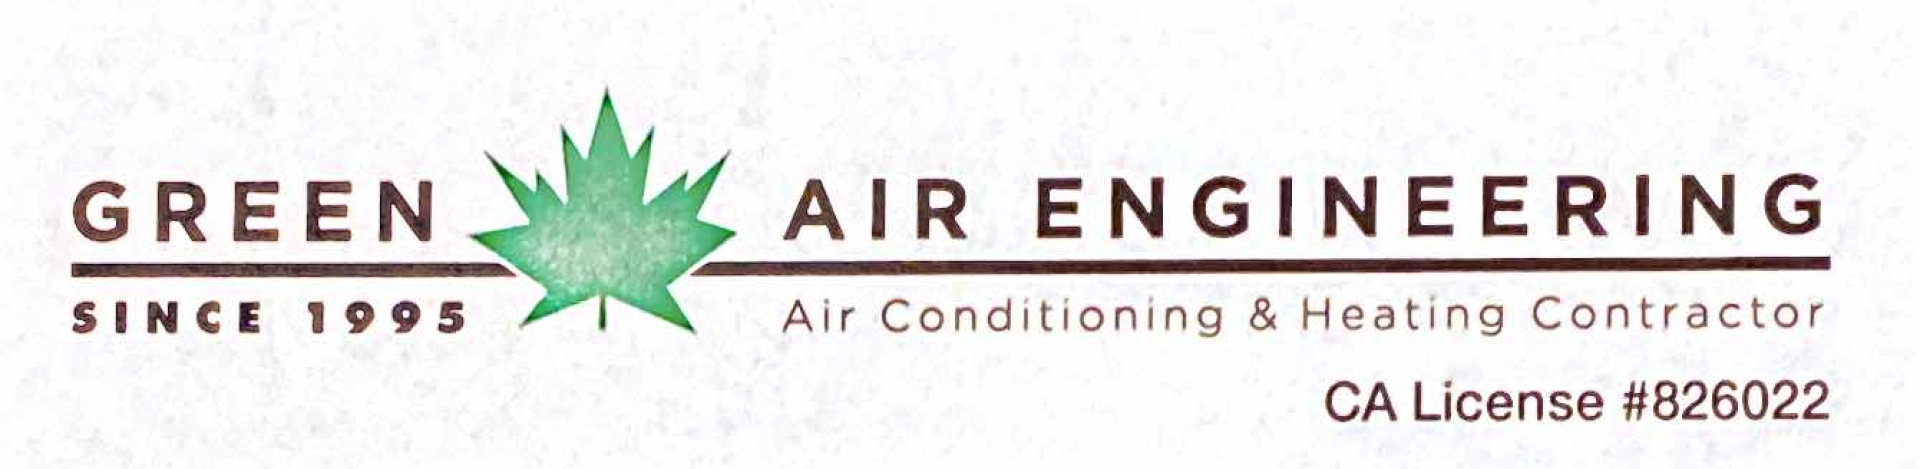 Green Air Engineering company logo